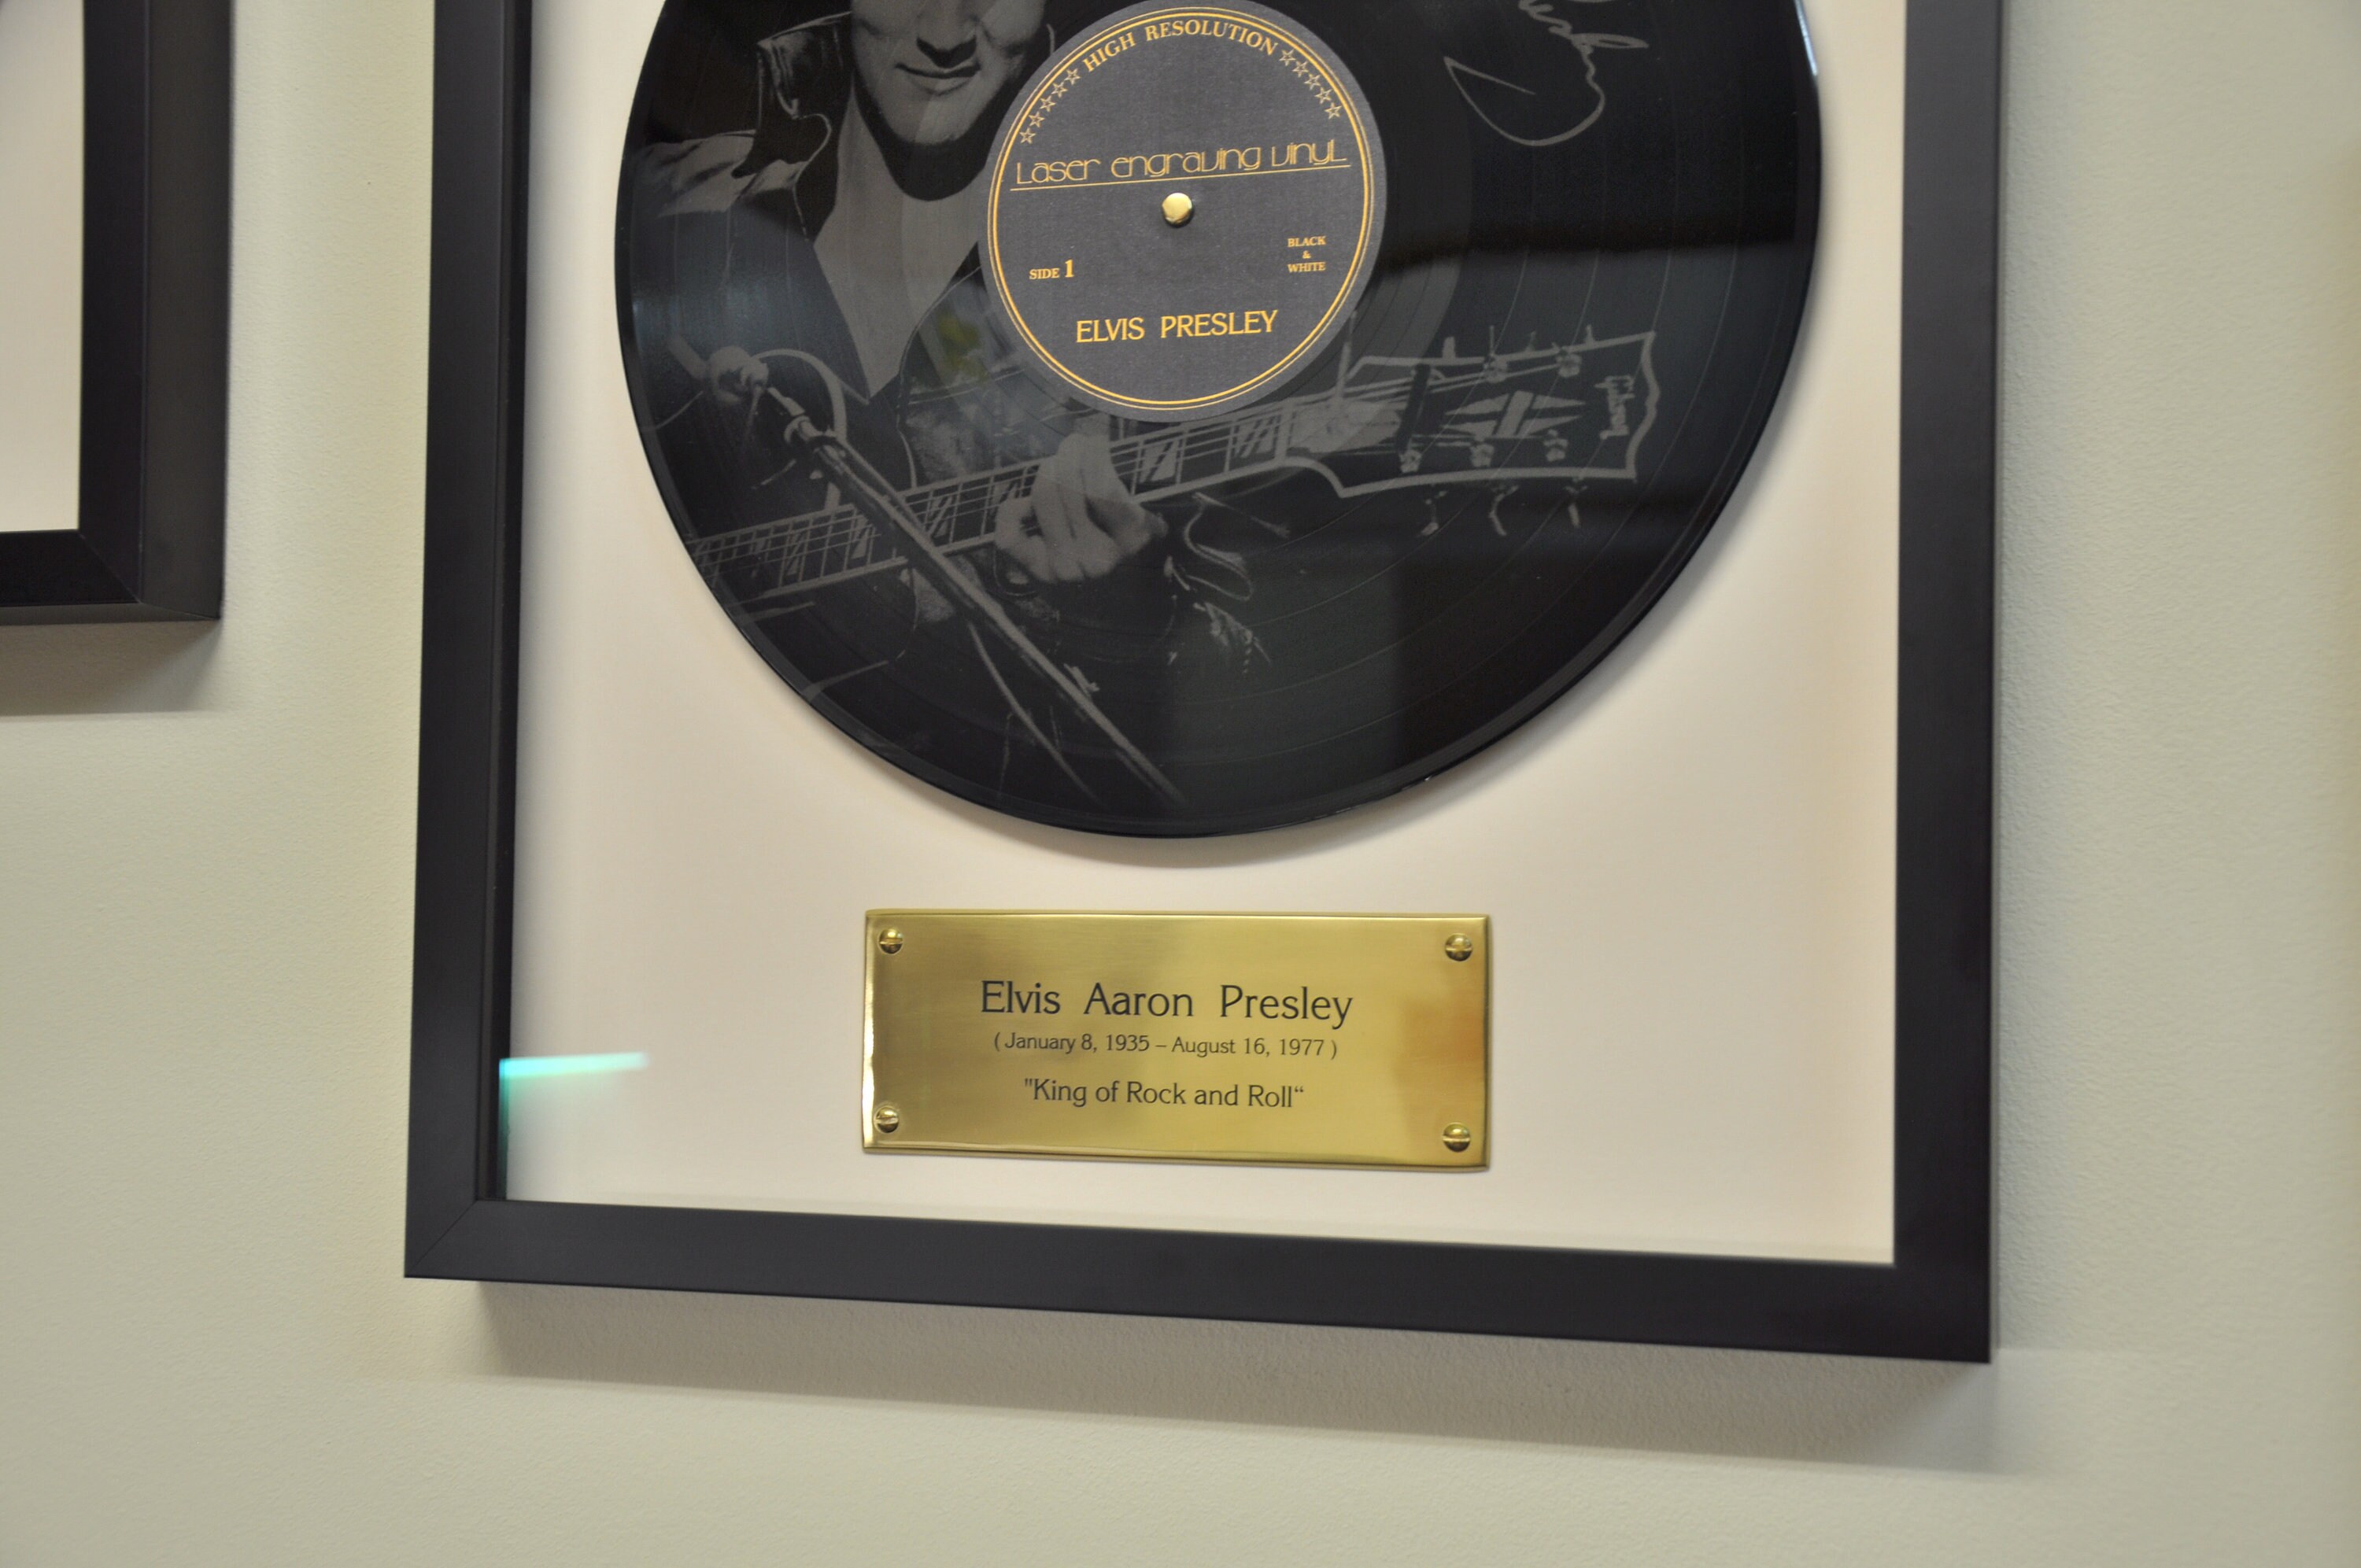 Michael Jackson Vinyl , Records / Laser Engraved Vinyl / Vinyl in Frame /  LP Records / Wall Mount Records / Wall Decor / Unique Gift 